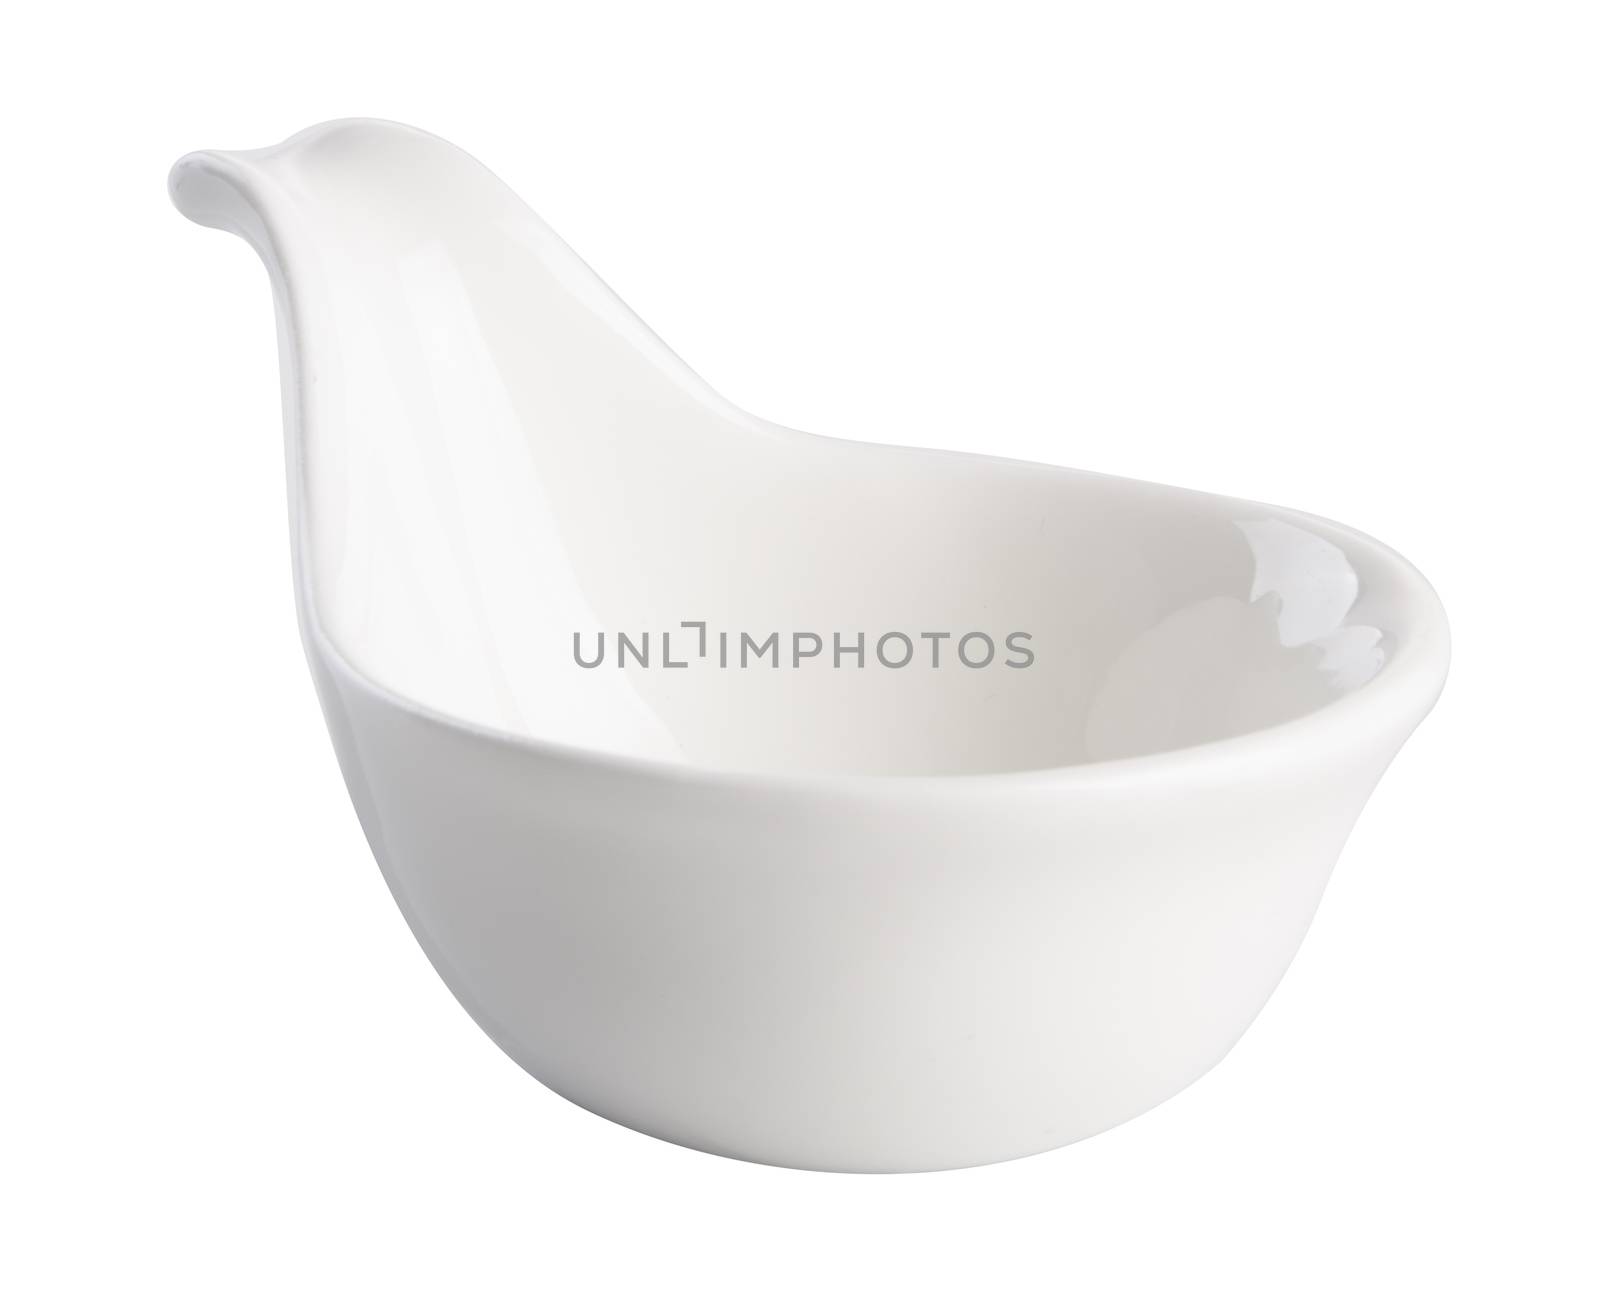 bowl. ceramic bowl on background. ceramic bowl on a background